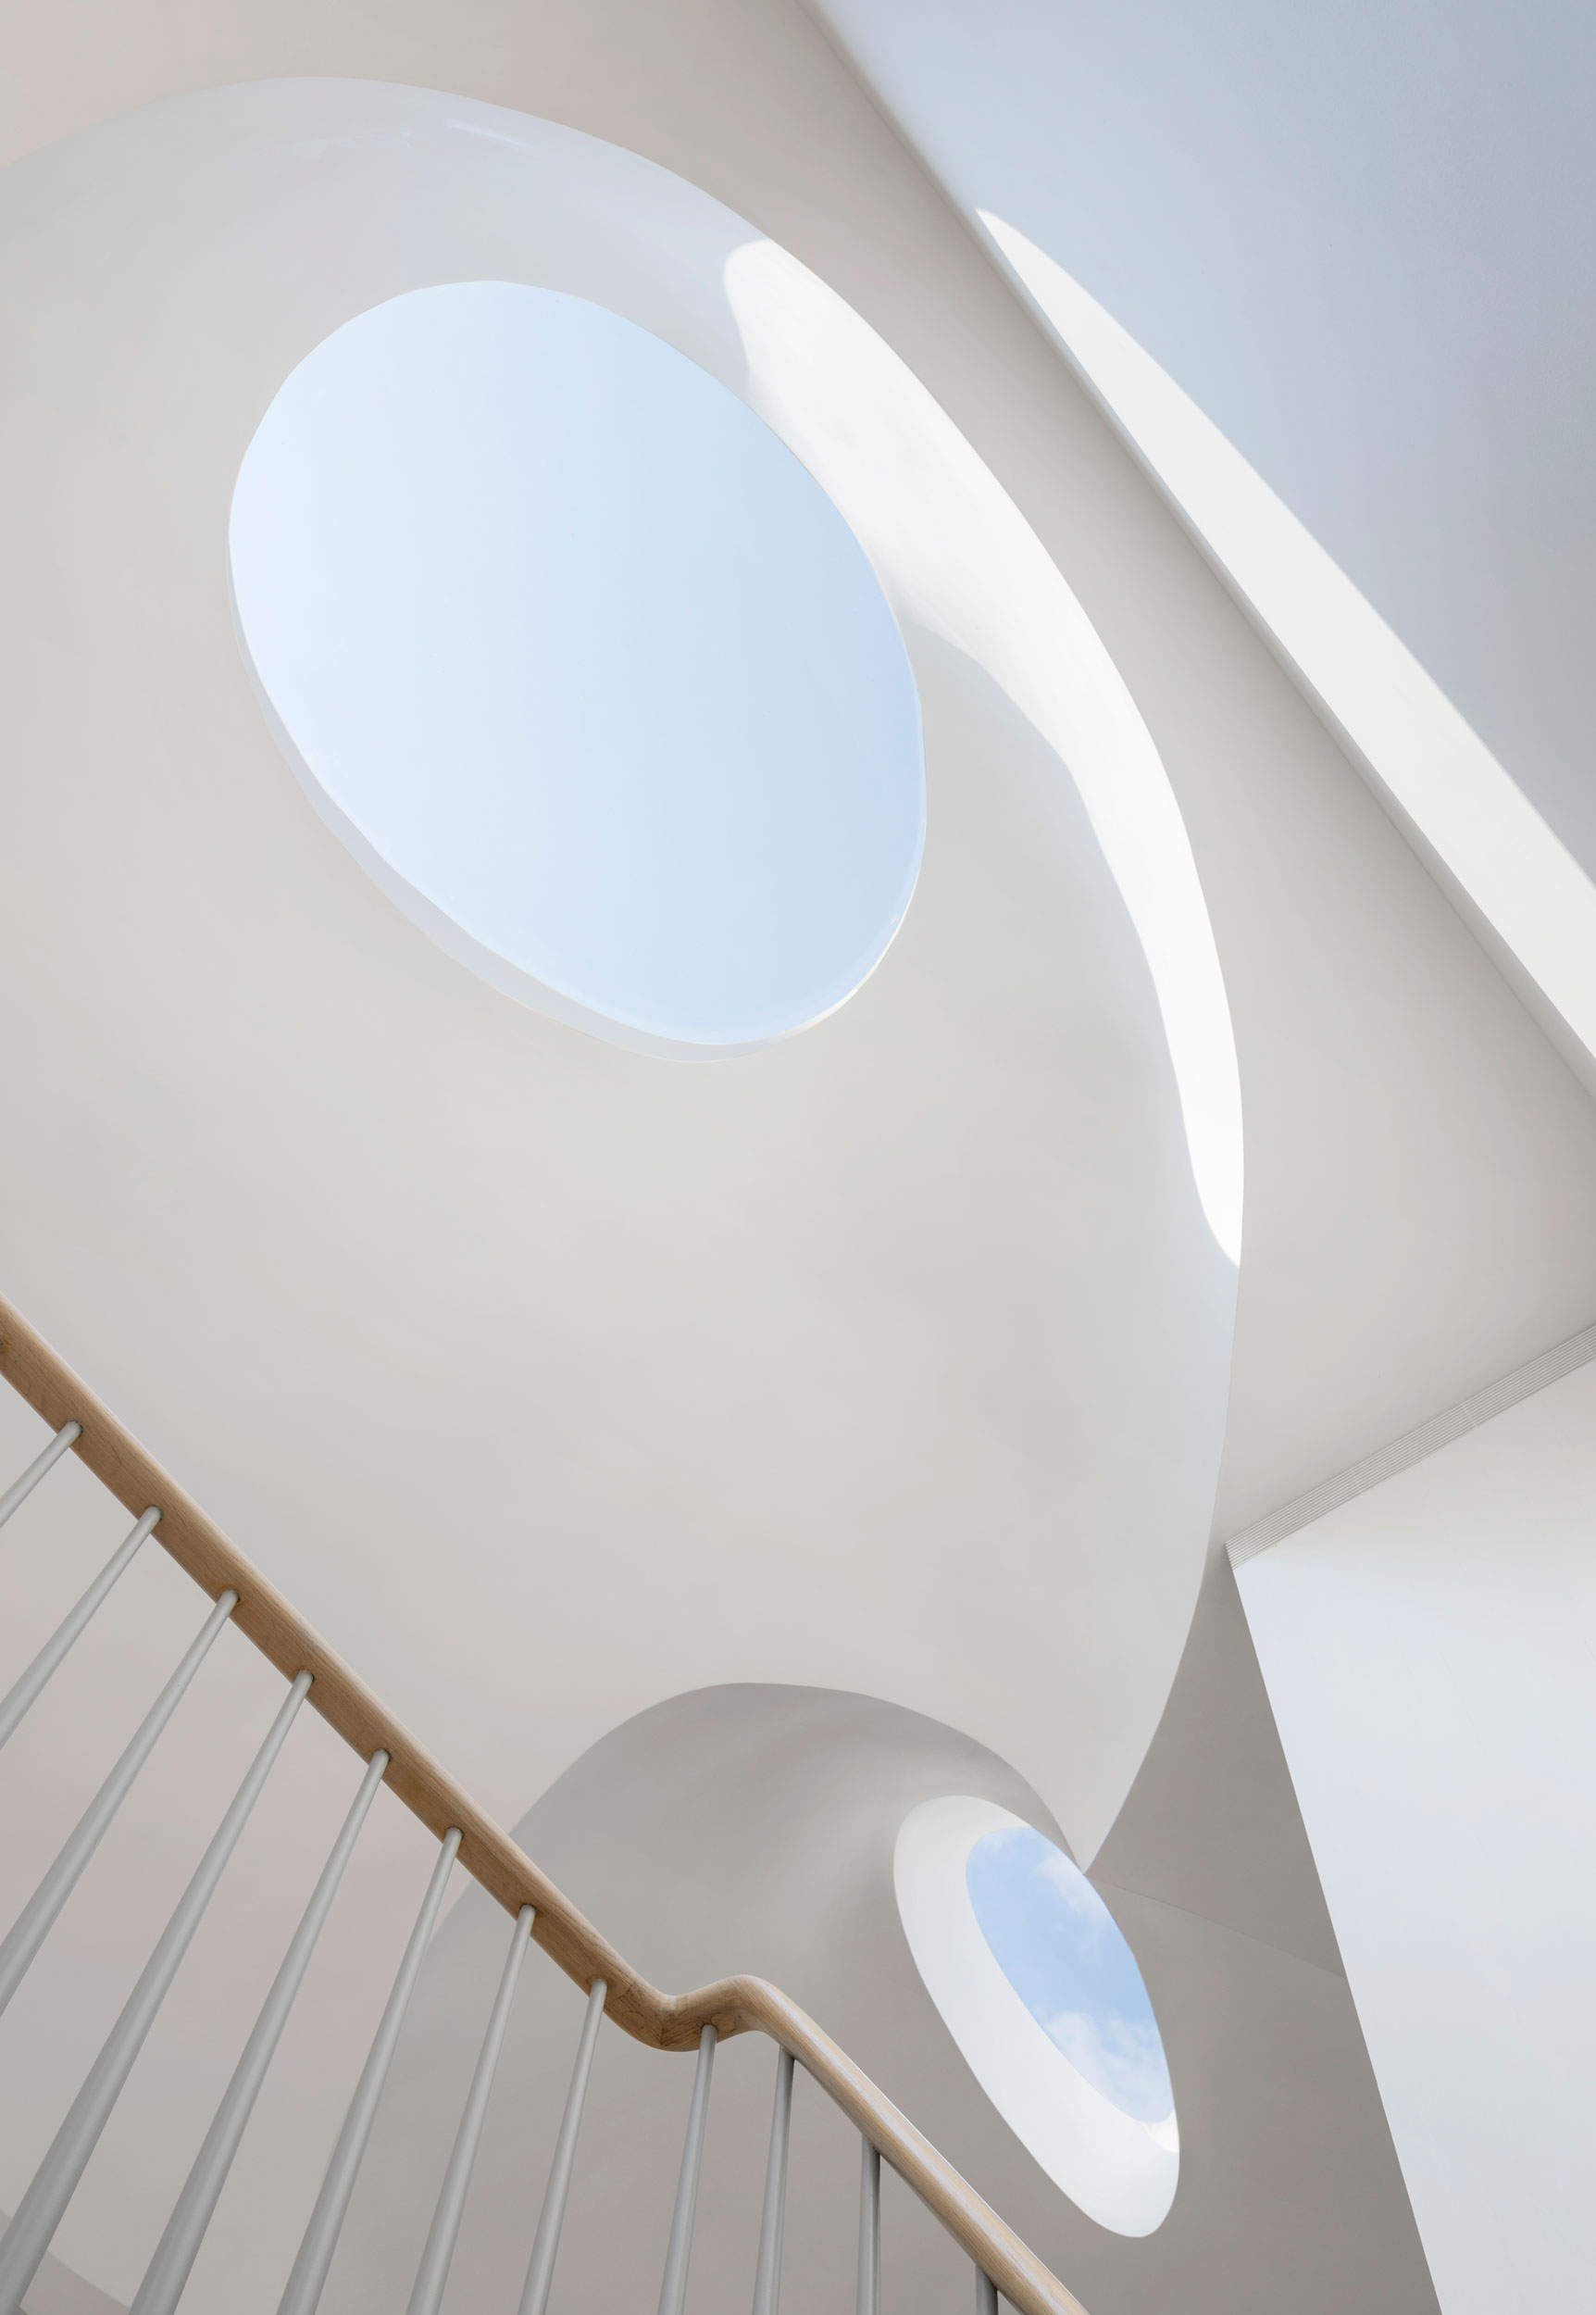 Oculi House by O'Neill Rose Architects. Photo: Michael Moran.